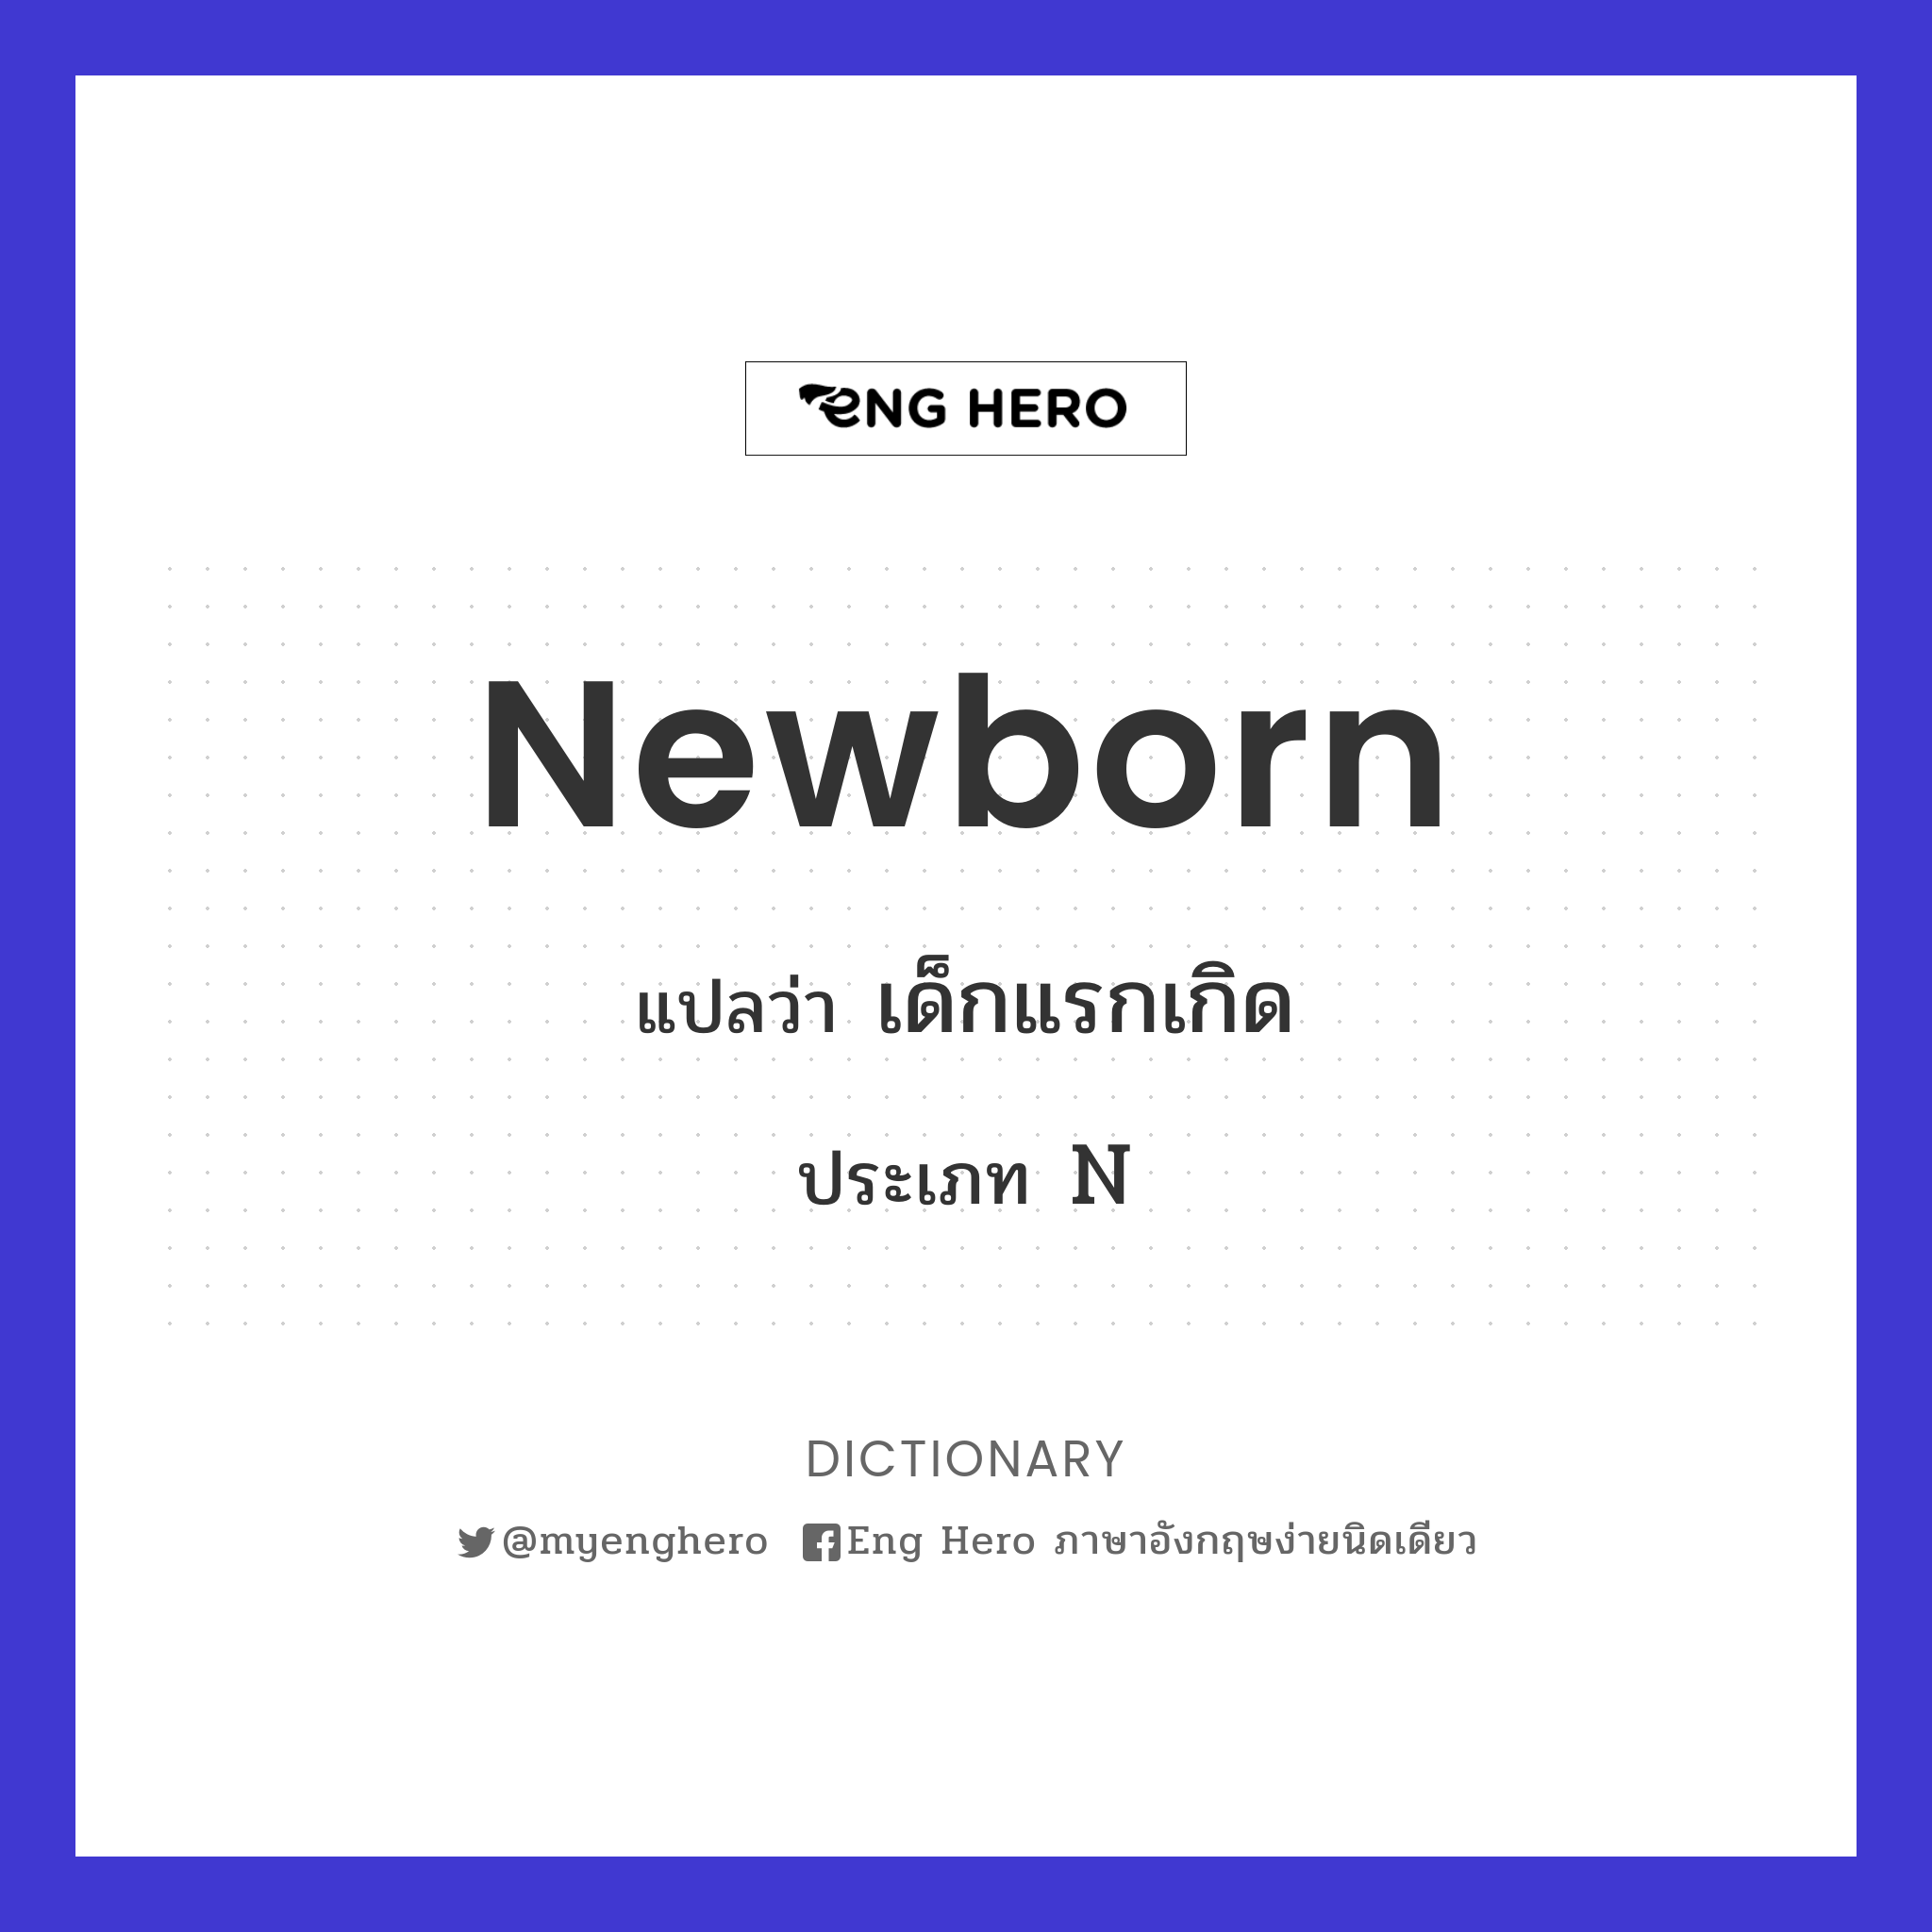 newborn